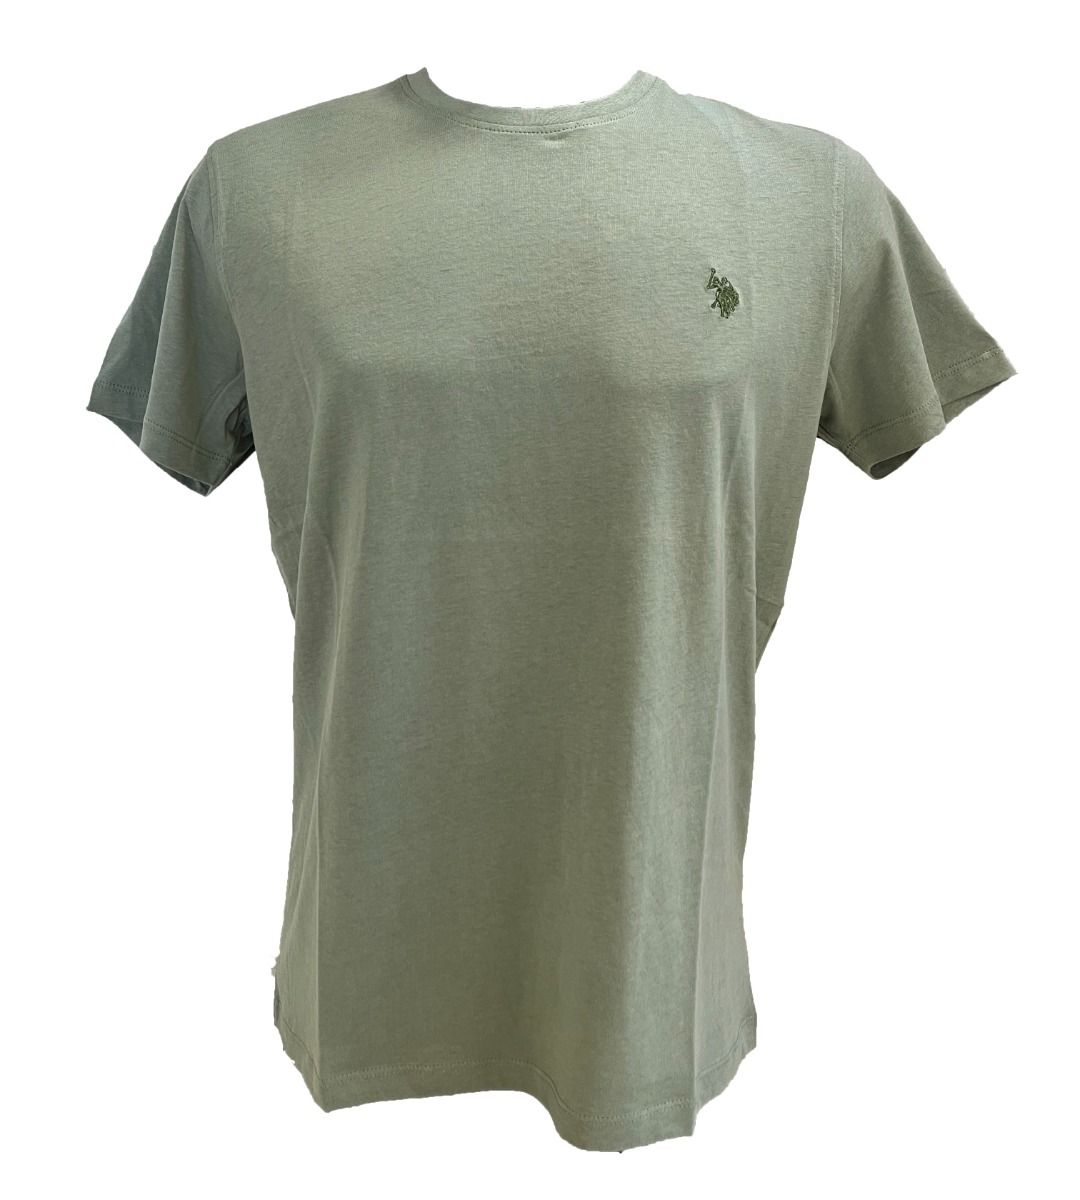 U.S. Polo Assn. Ανδρικό T-Shirt Mick 67359 49351-142 Πράσινο NEW ARRIVALS>ΑΝΔΡΑΣ>ΡΟΥΧΑ